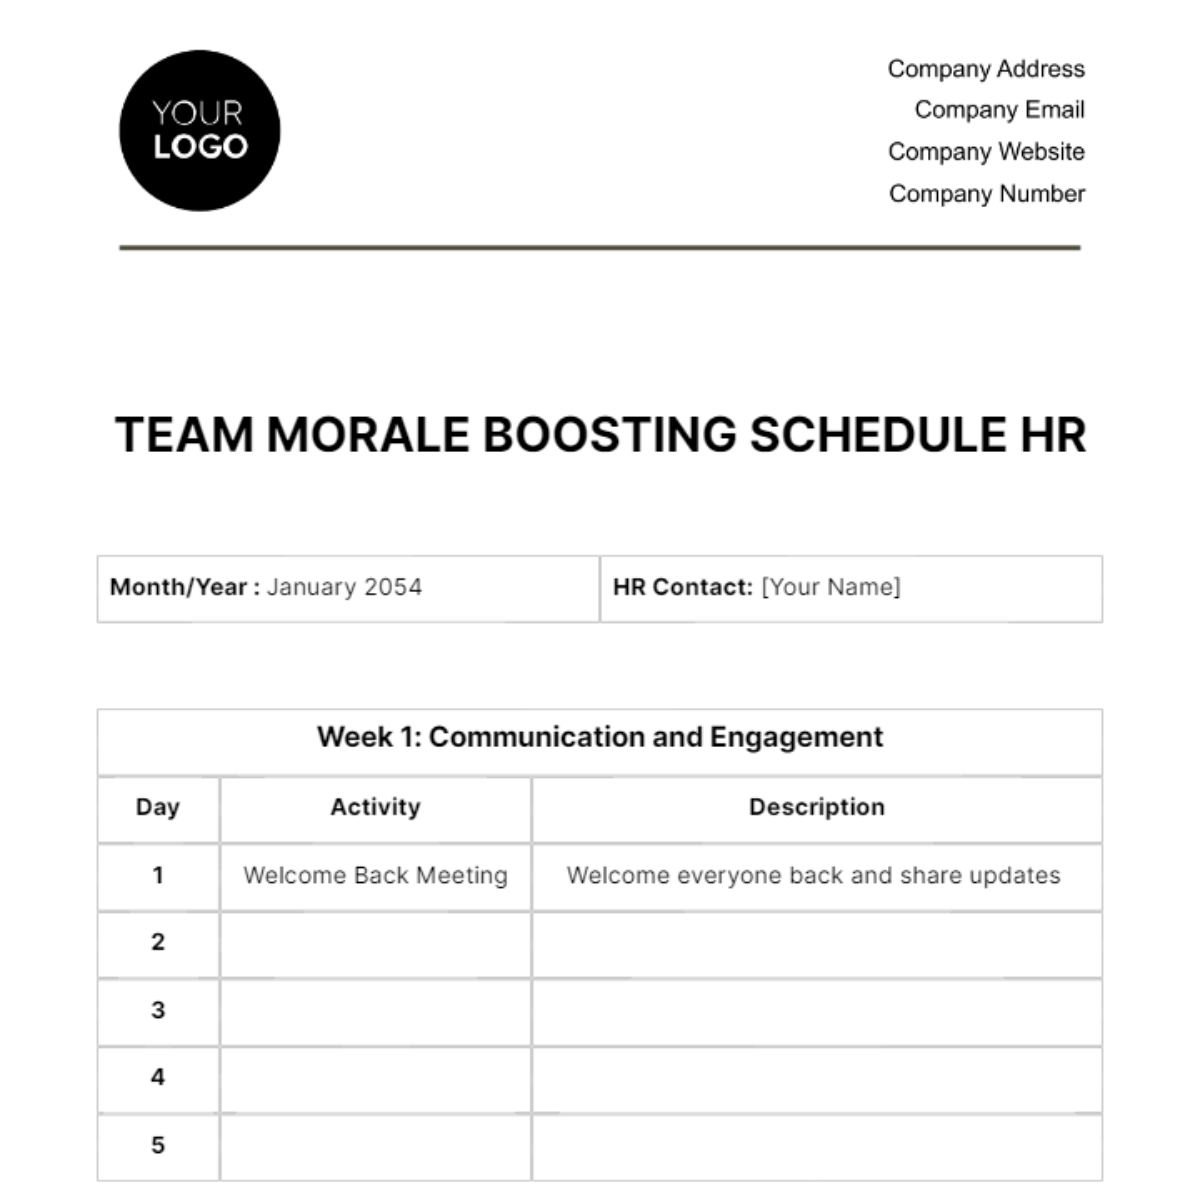 Team Morale Boosting Schedule HR Template